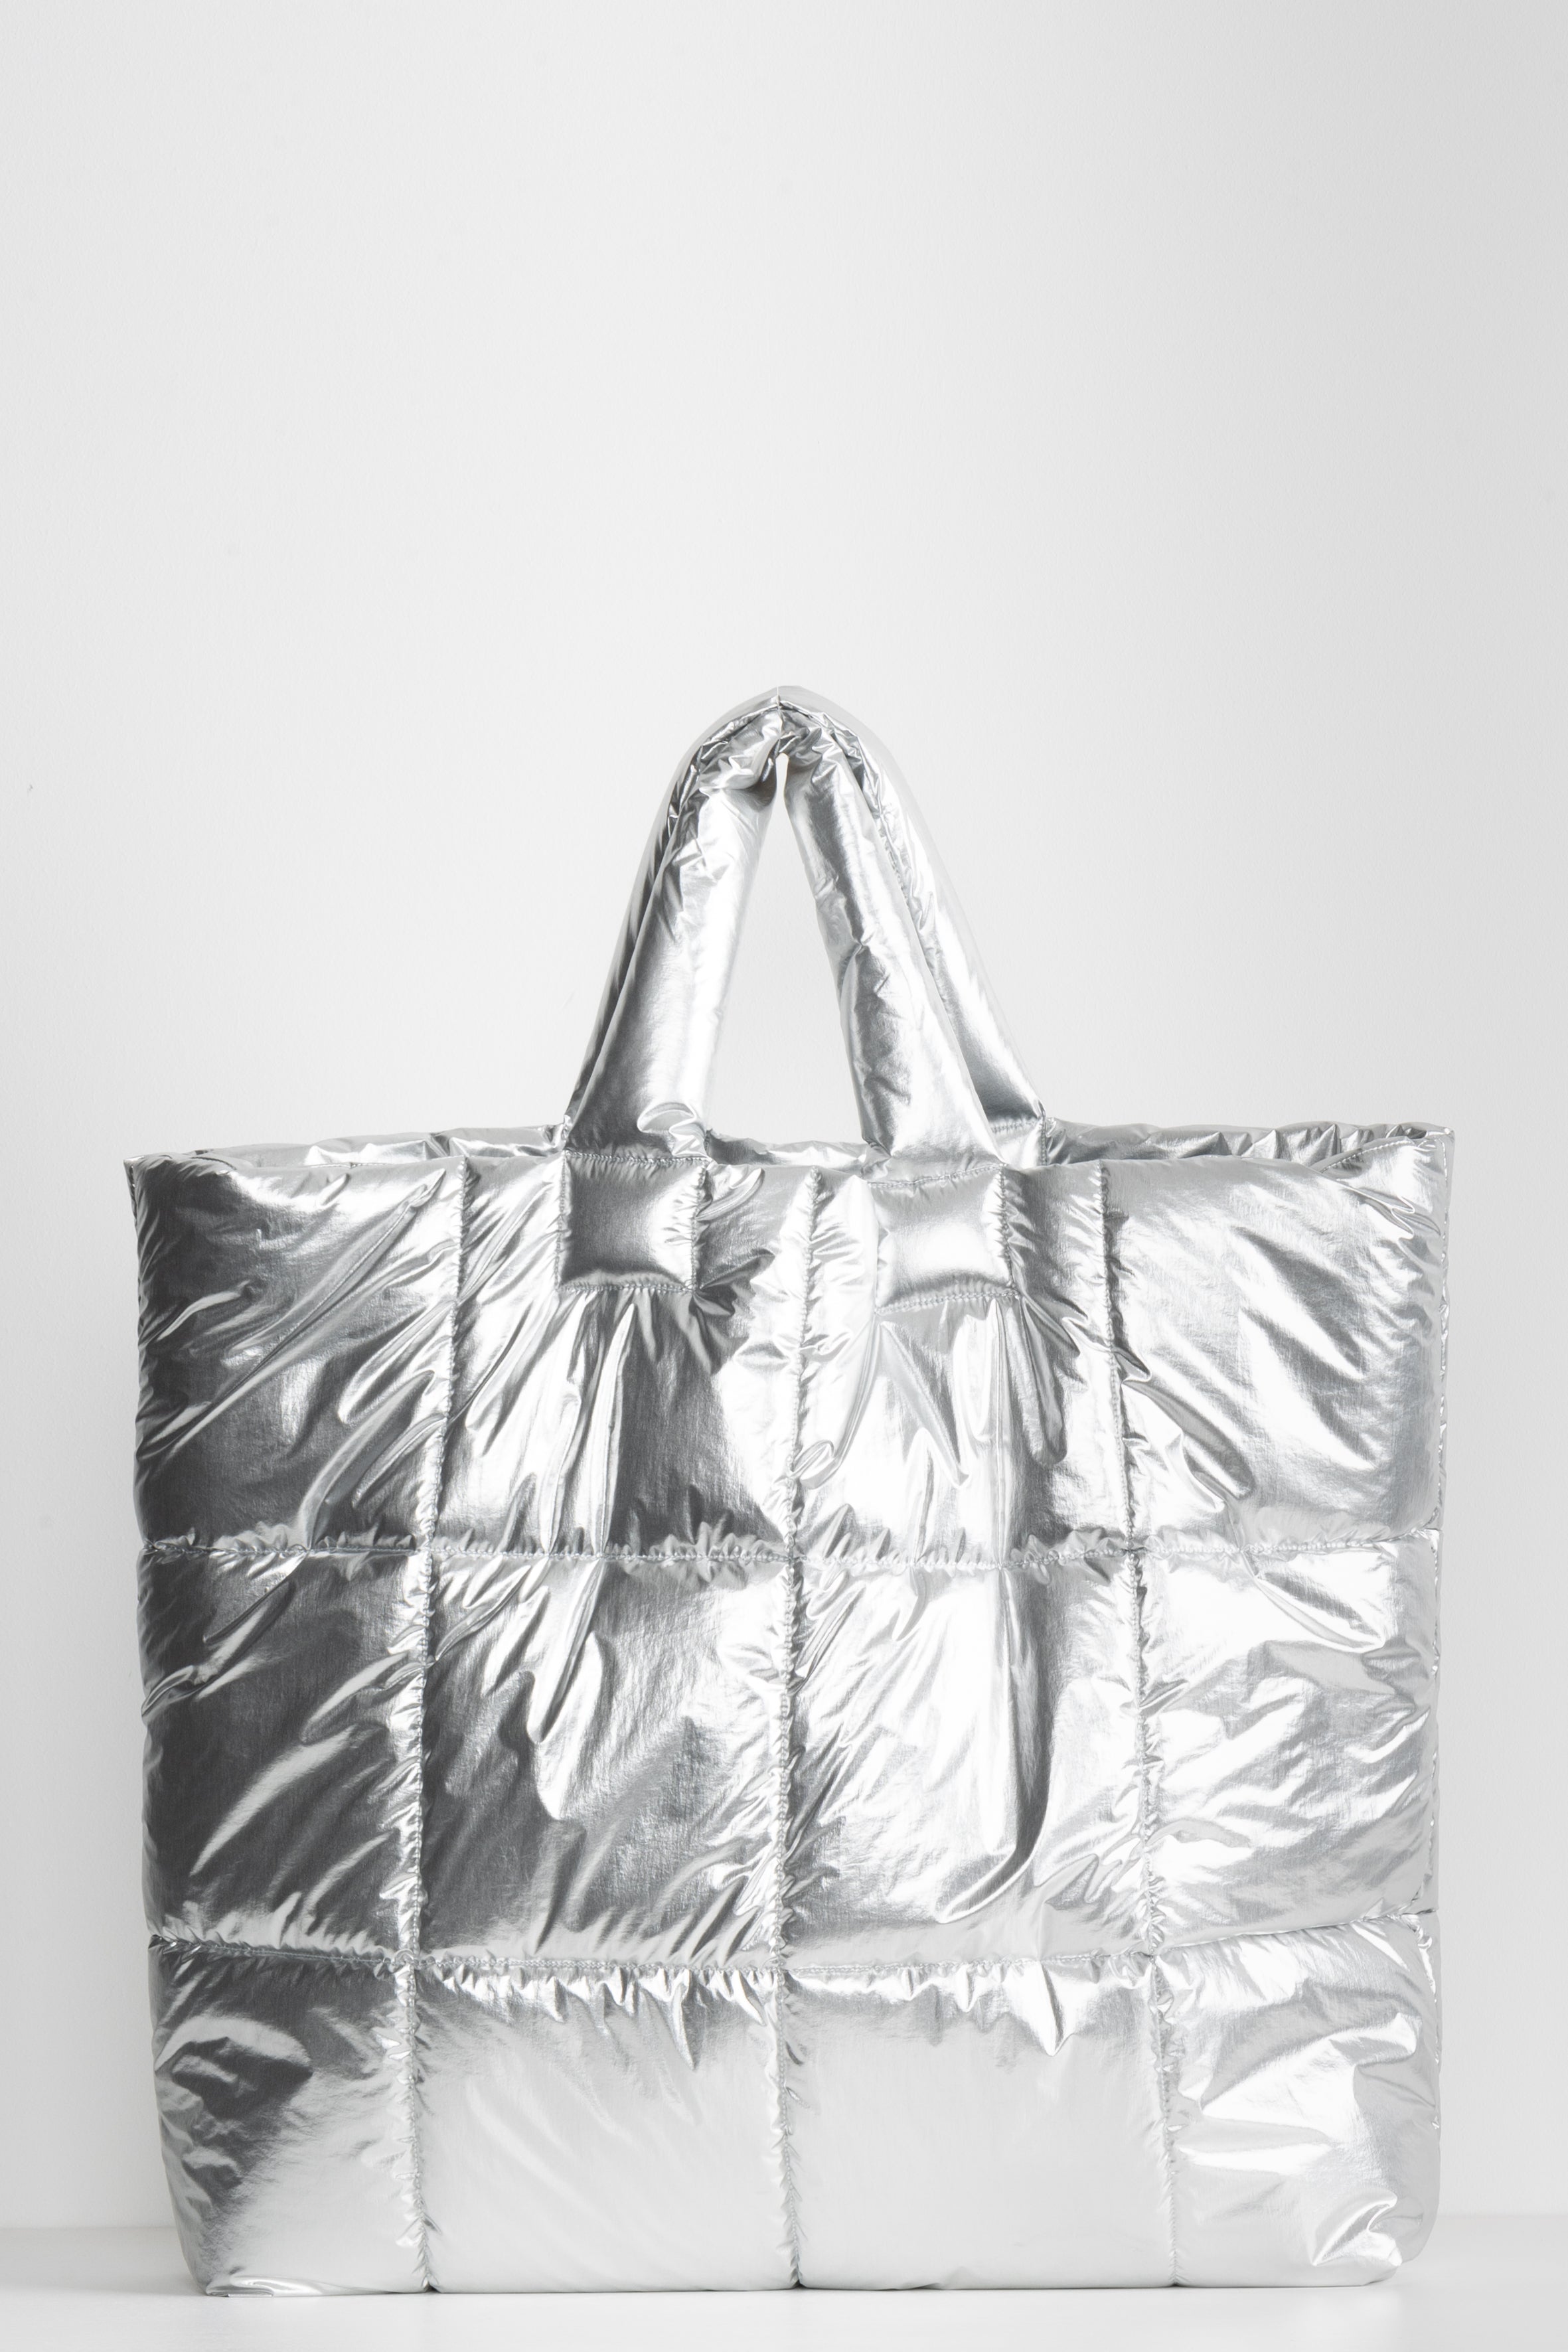 Buy PILLOW Puffer Bag in Charcoal Black,padded Super Puffer Oversize Tote  Shopper Bag Shoulder Bag Quilted Bag Online in India - Etsy